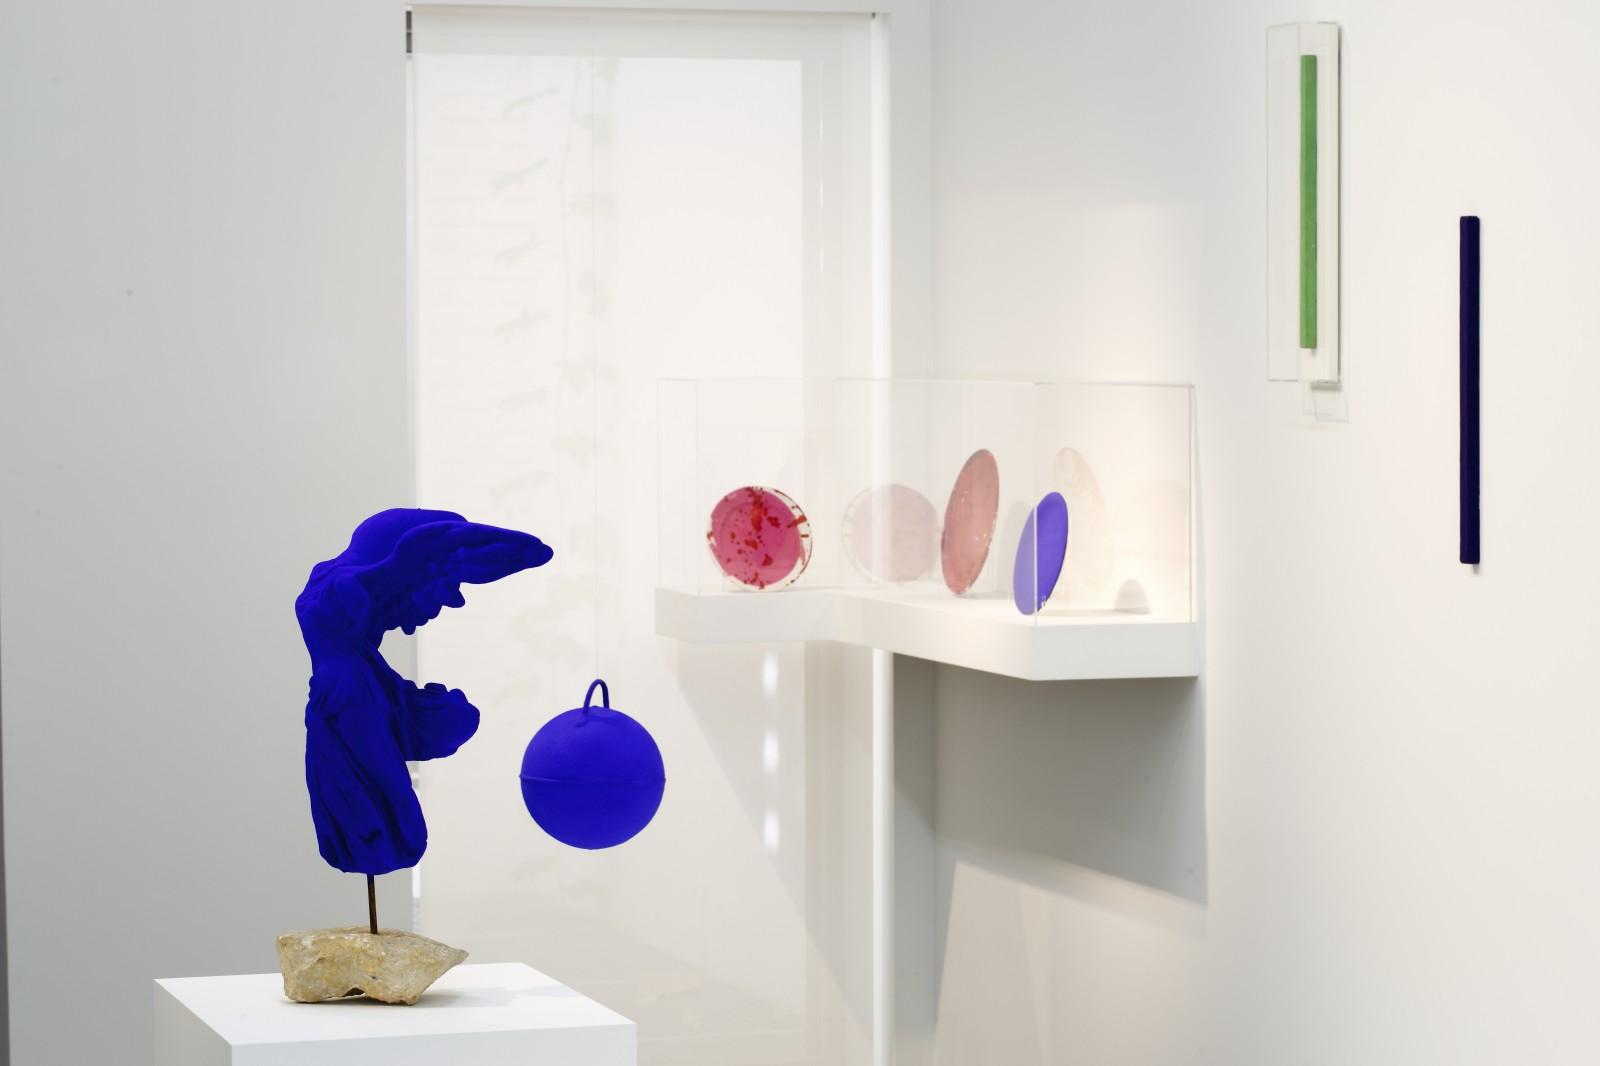 View of the exhibition "Yves Klein - Intimo", Galería Cayón, 2015